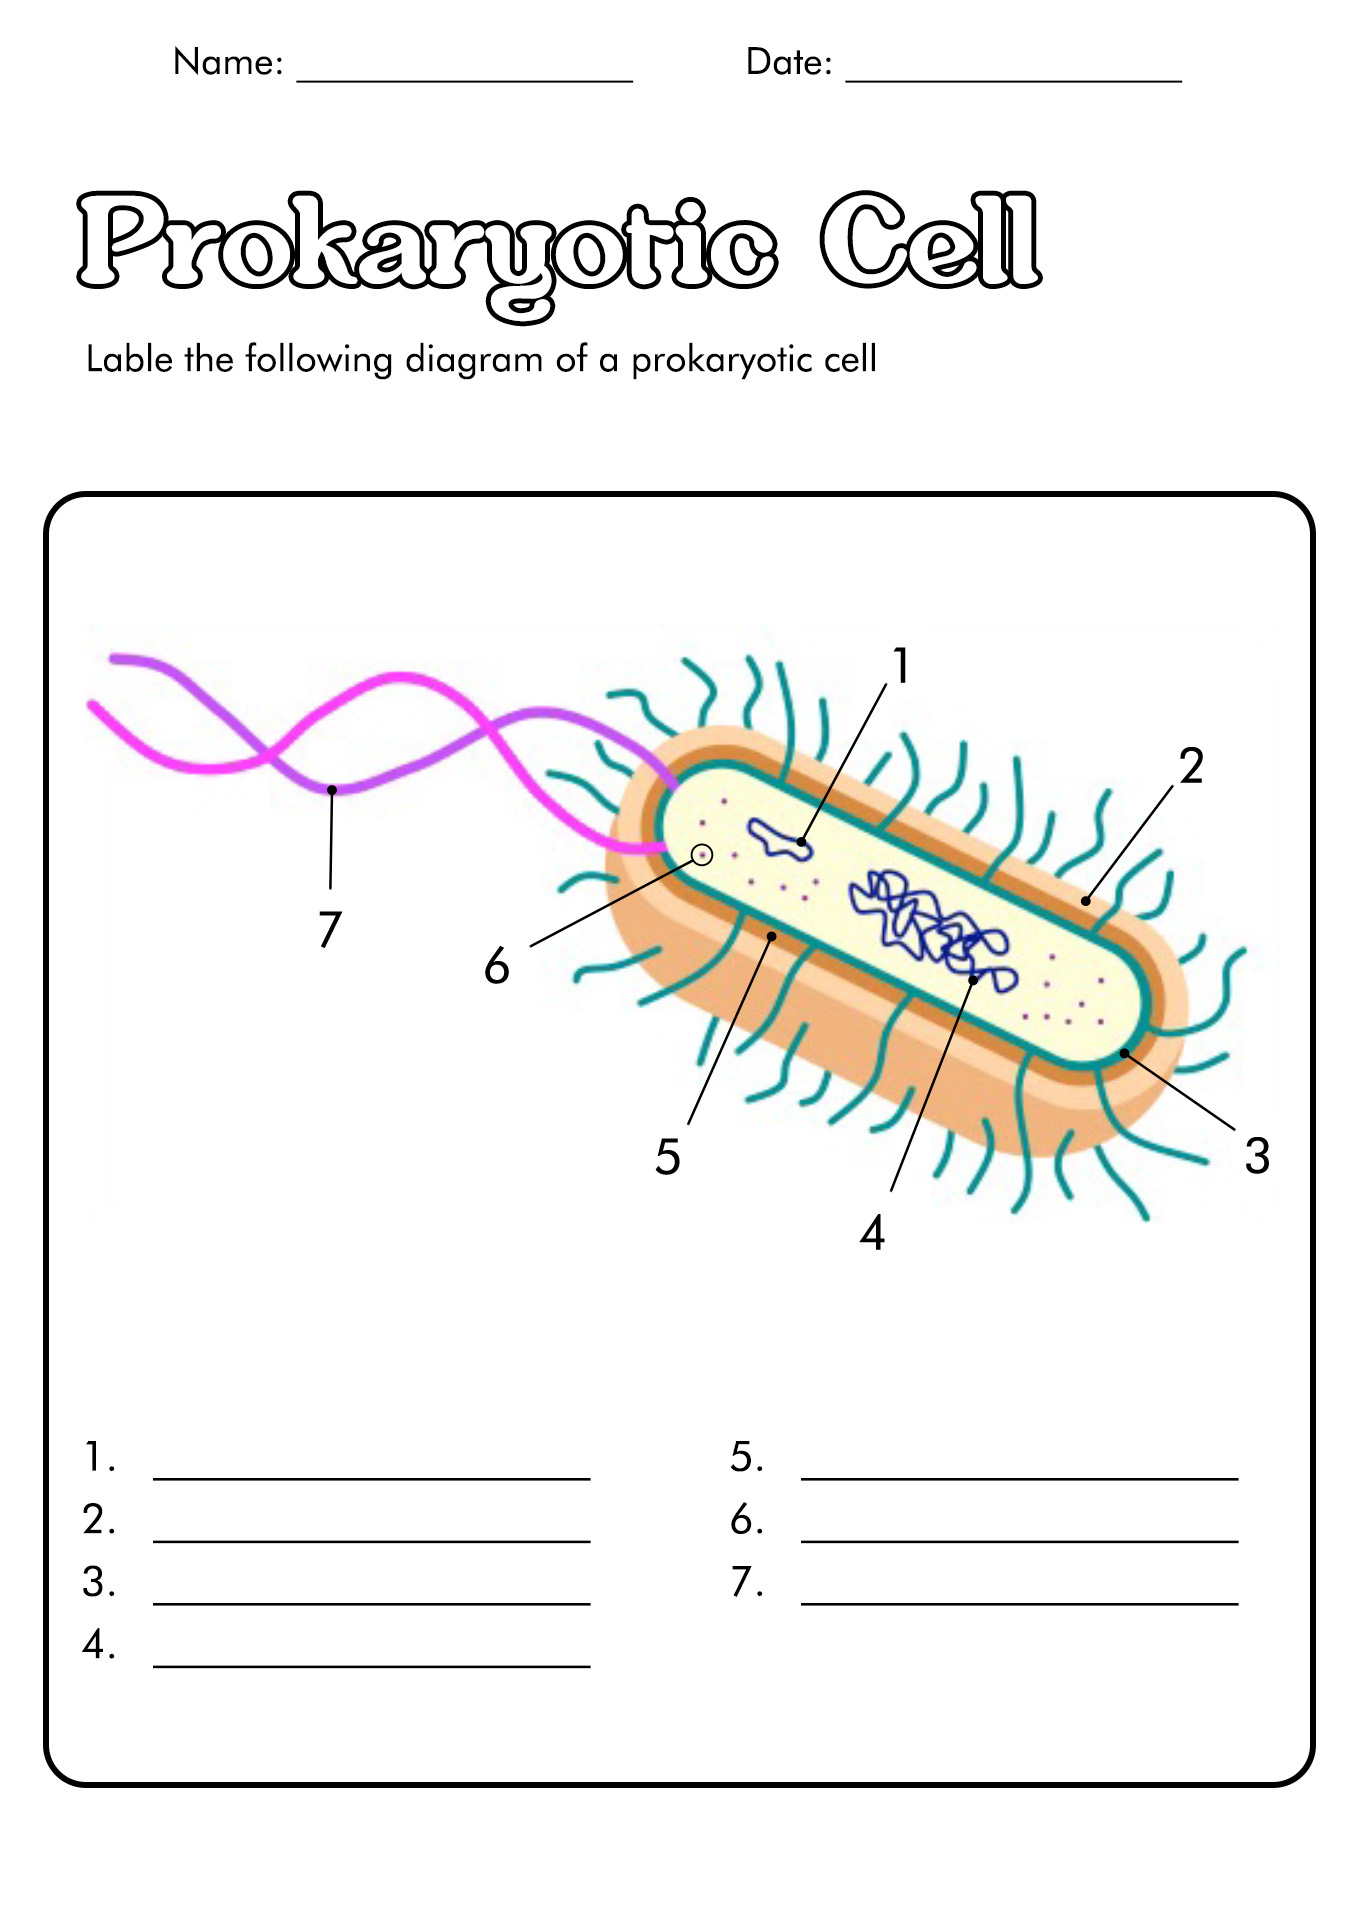 Prokaryotic Cell Diagram Worksheet Image